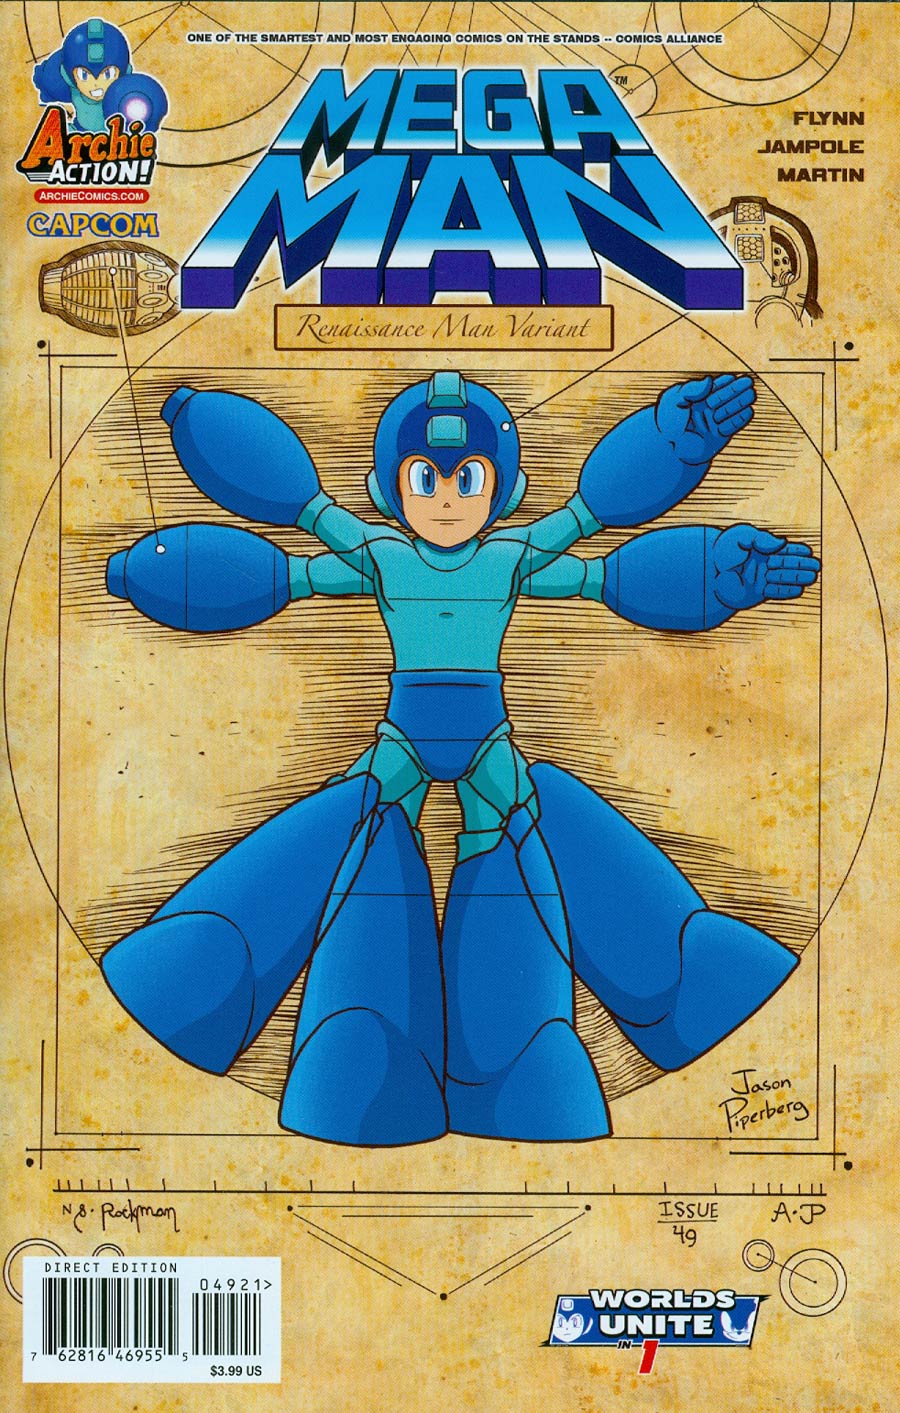 Mega Man Vol 2 #49 Cover B Variant Jason Piperberg Renaissance Man Cover (Worlds Unite Prelude)